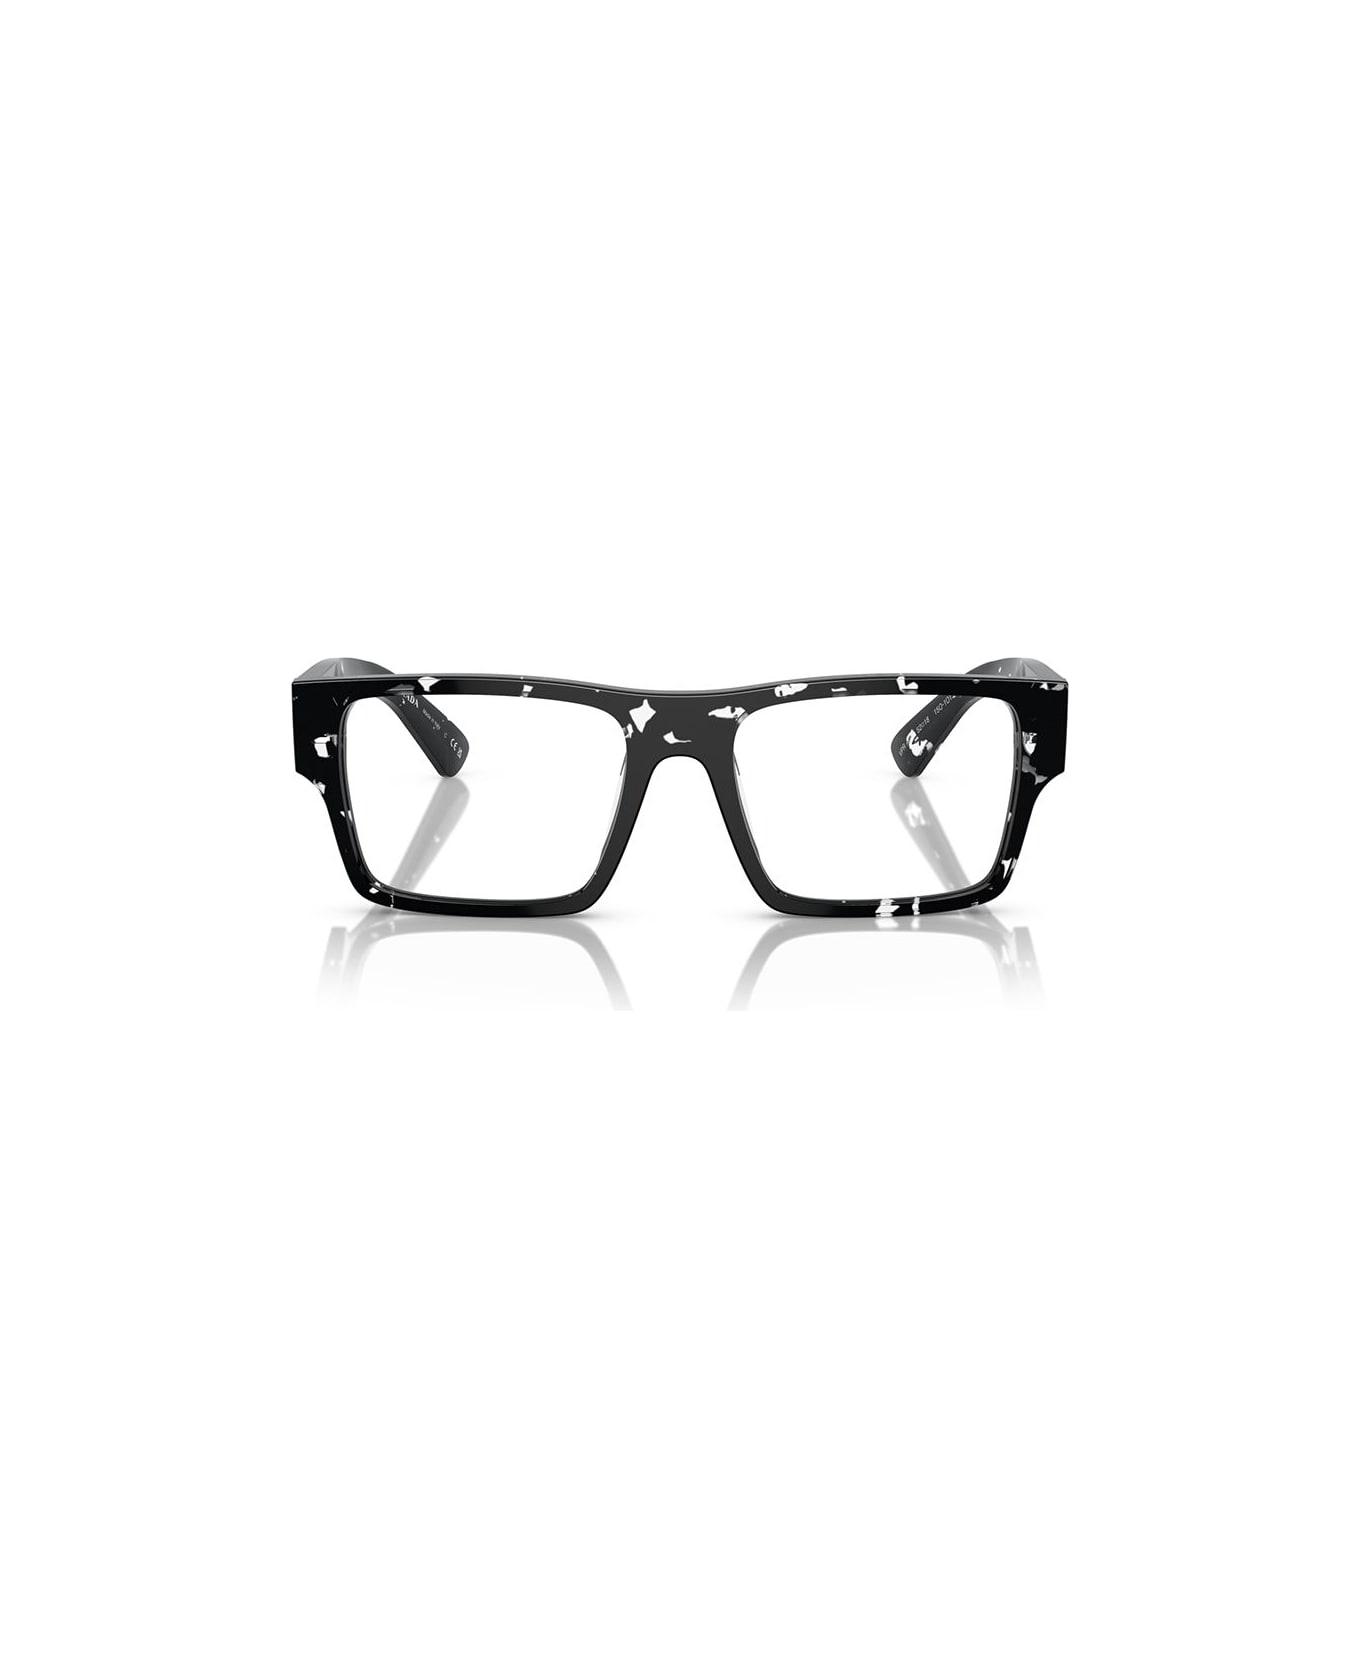 Prada Eyewear Glasses - 15O1O1